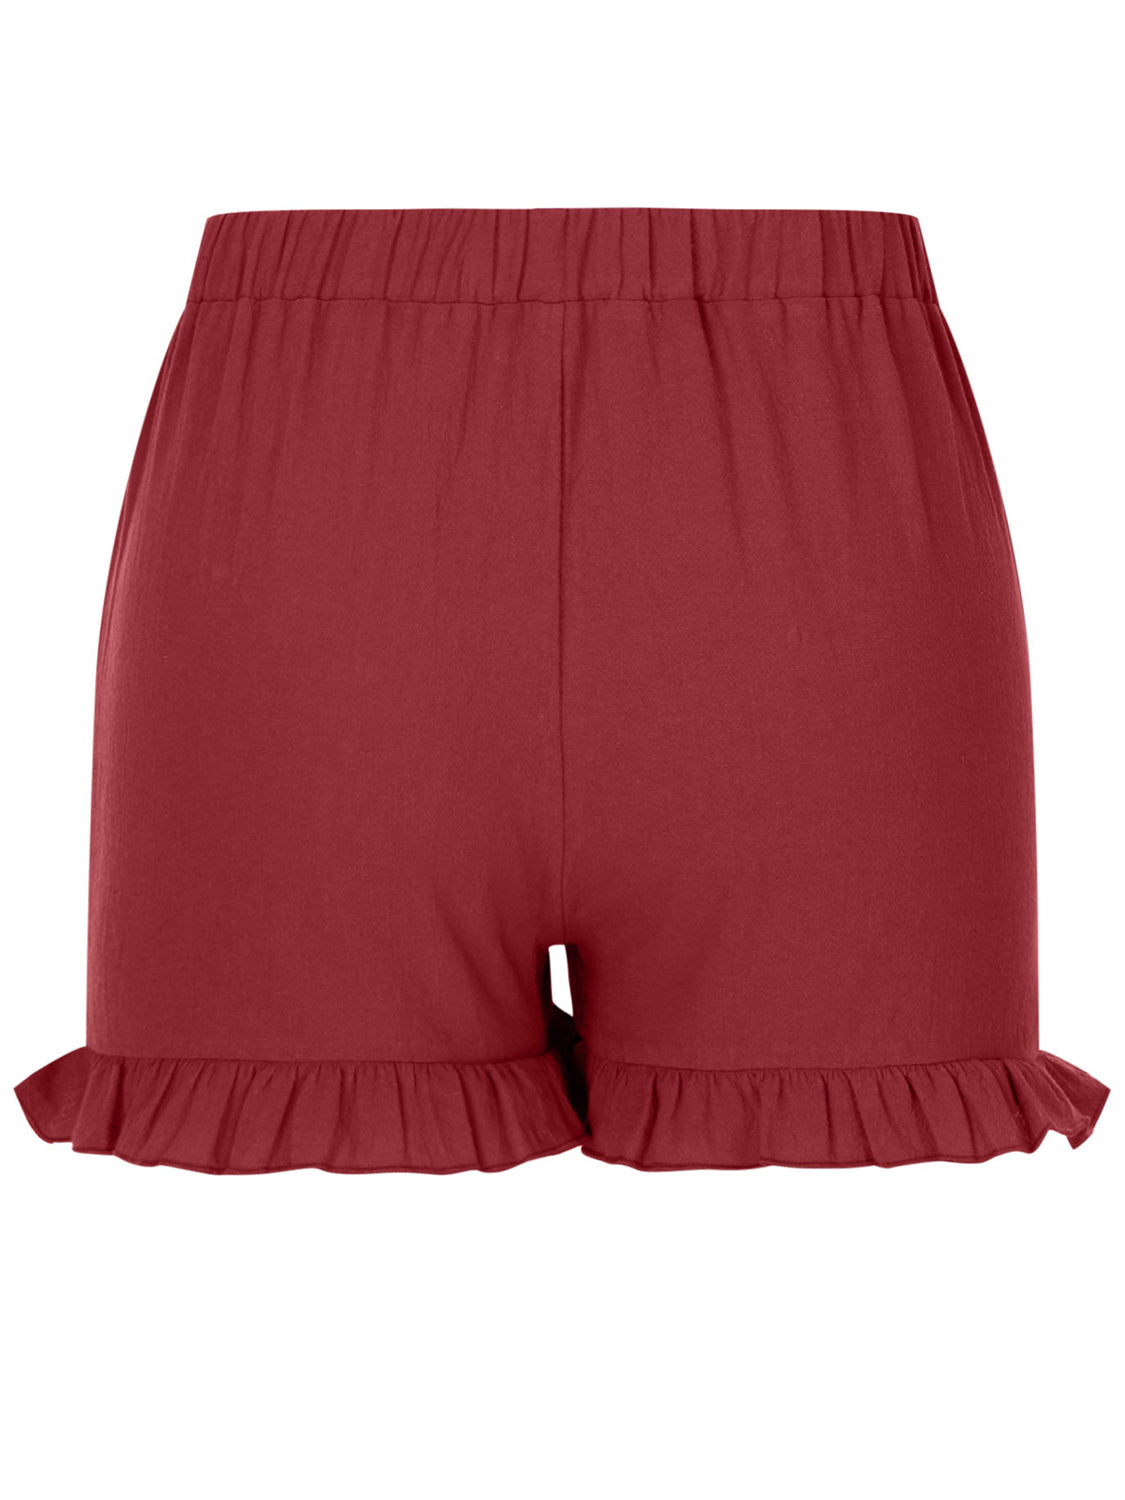 PREORDER- Frill Elastic Waist Shorts